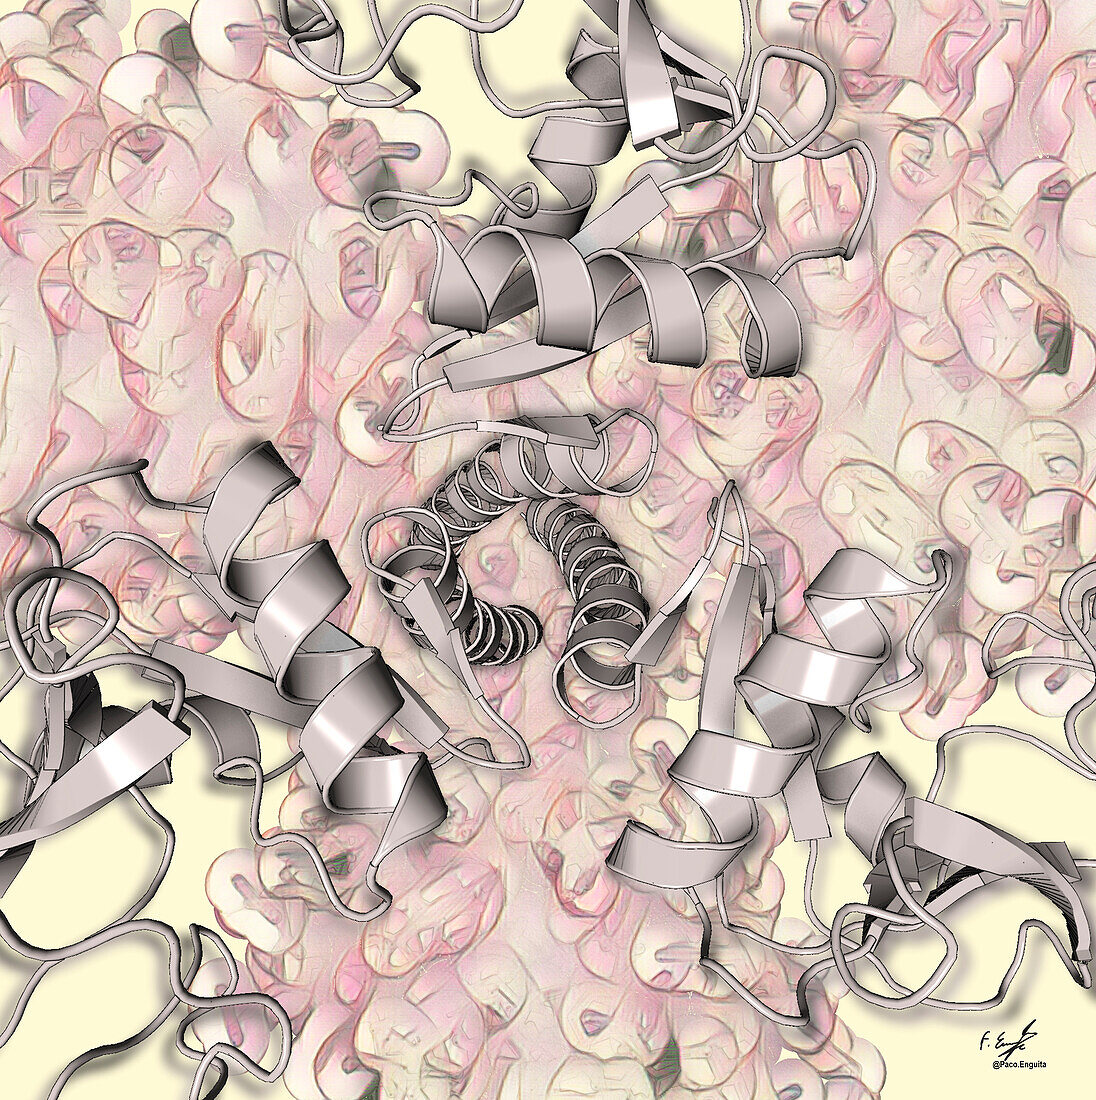 Tetranectin plasminogen-binding protein, illustration